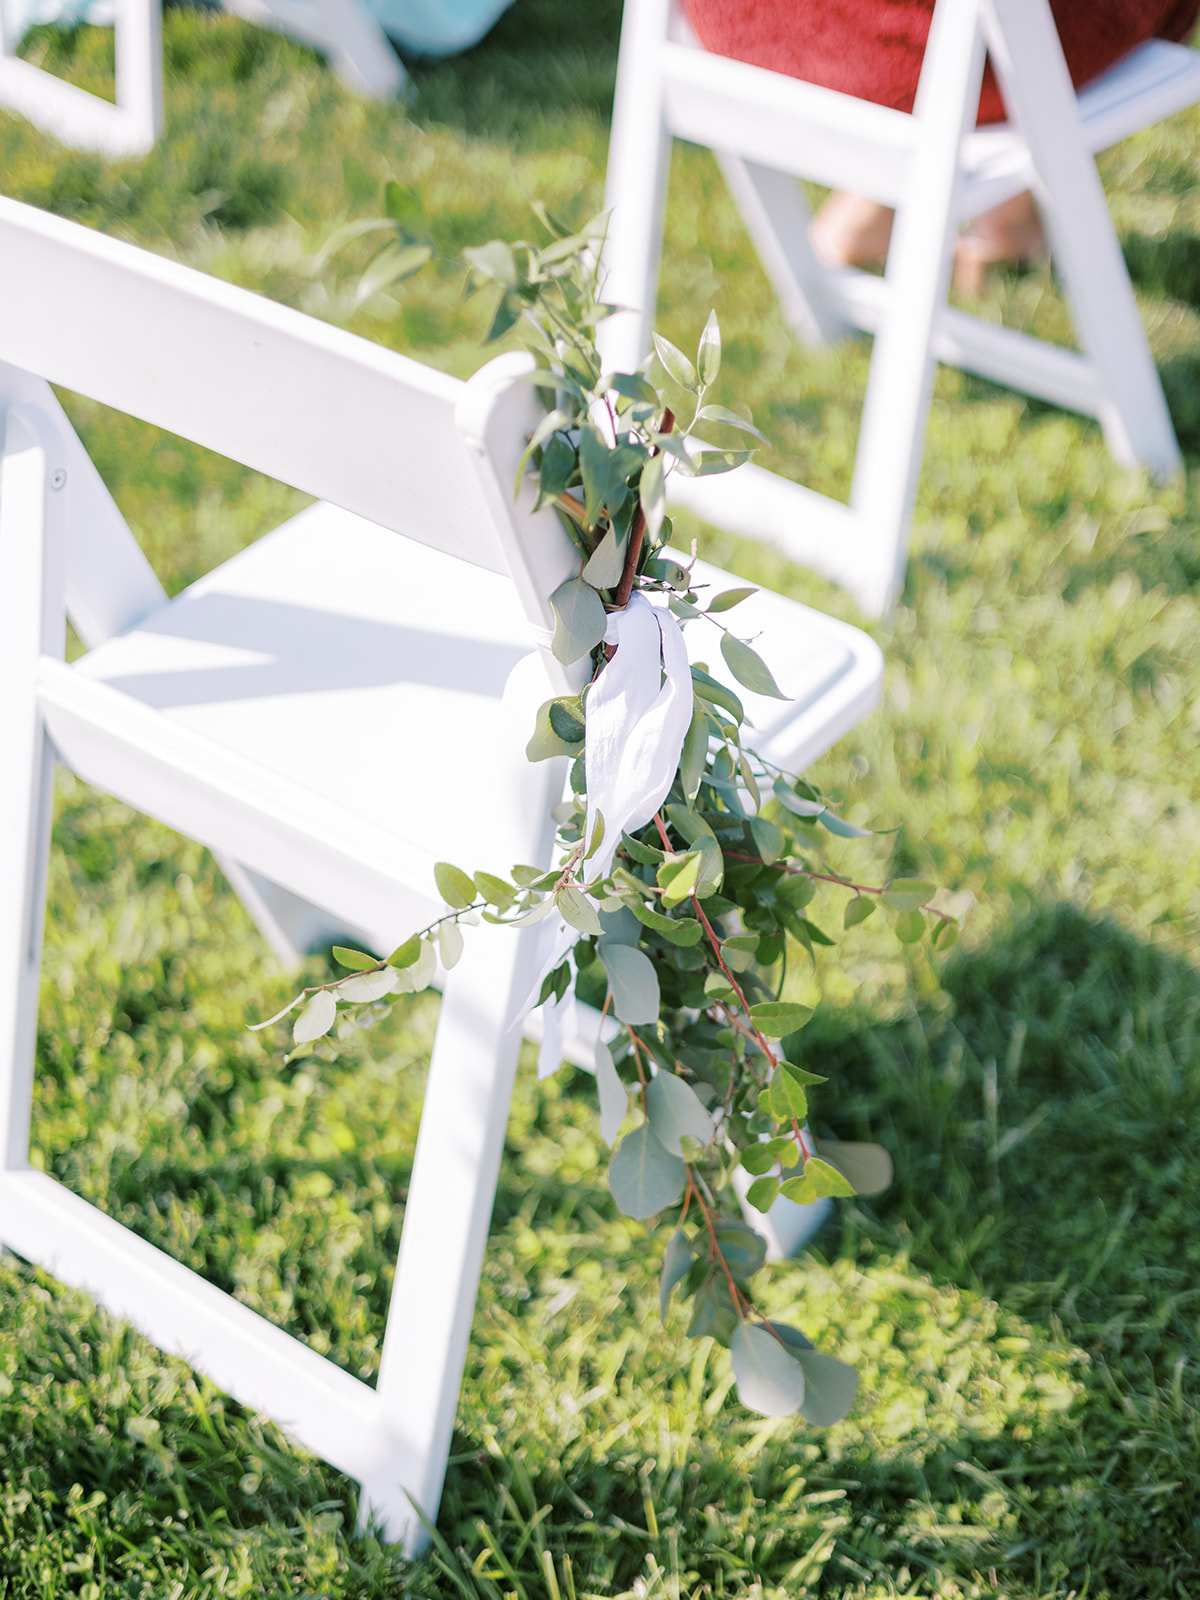 morais vineyard winery virginia bealeton wedding details rustic white rose florals elegant minimalistic pinterest ideas